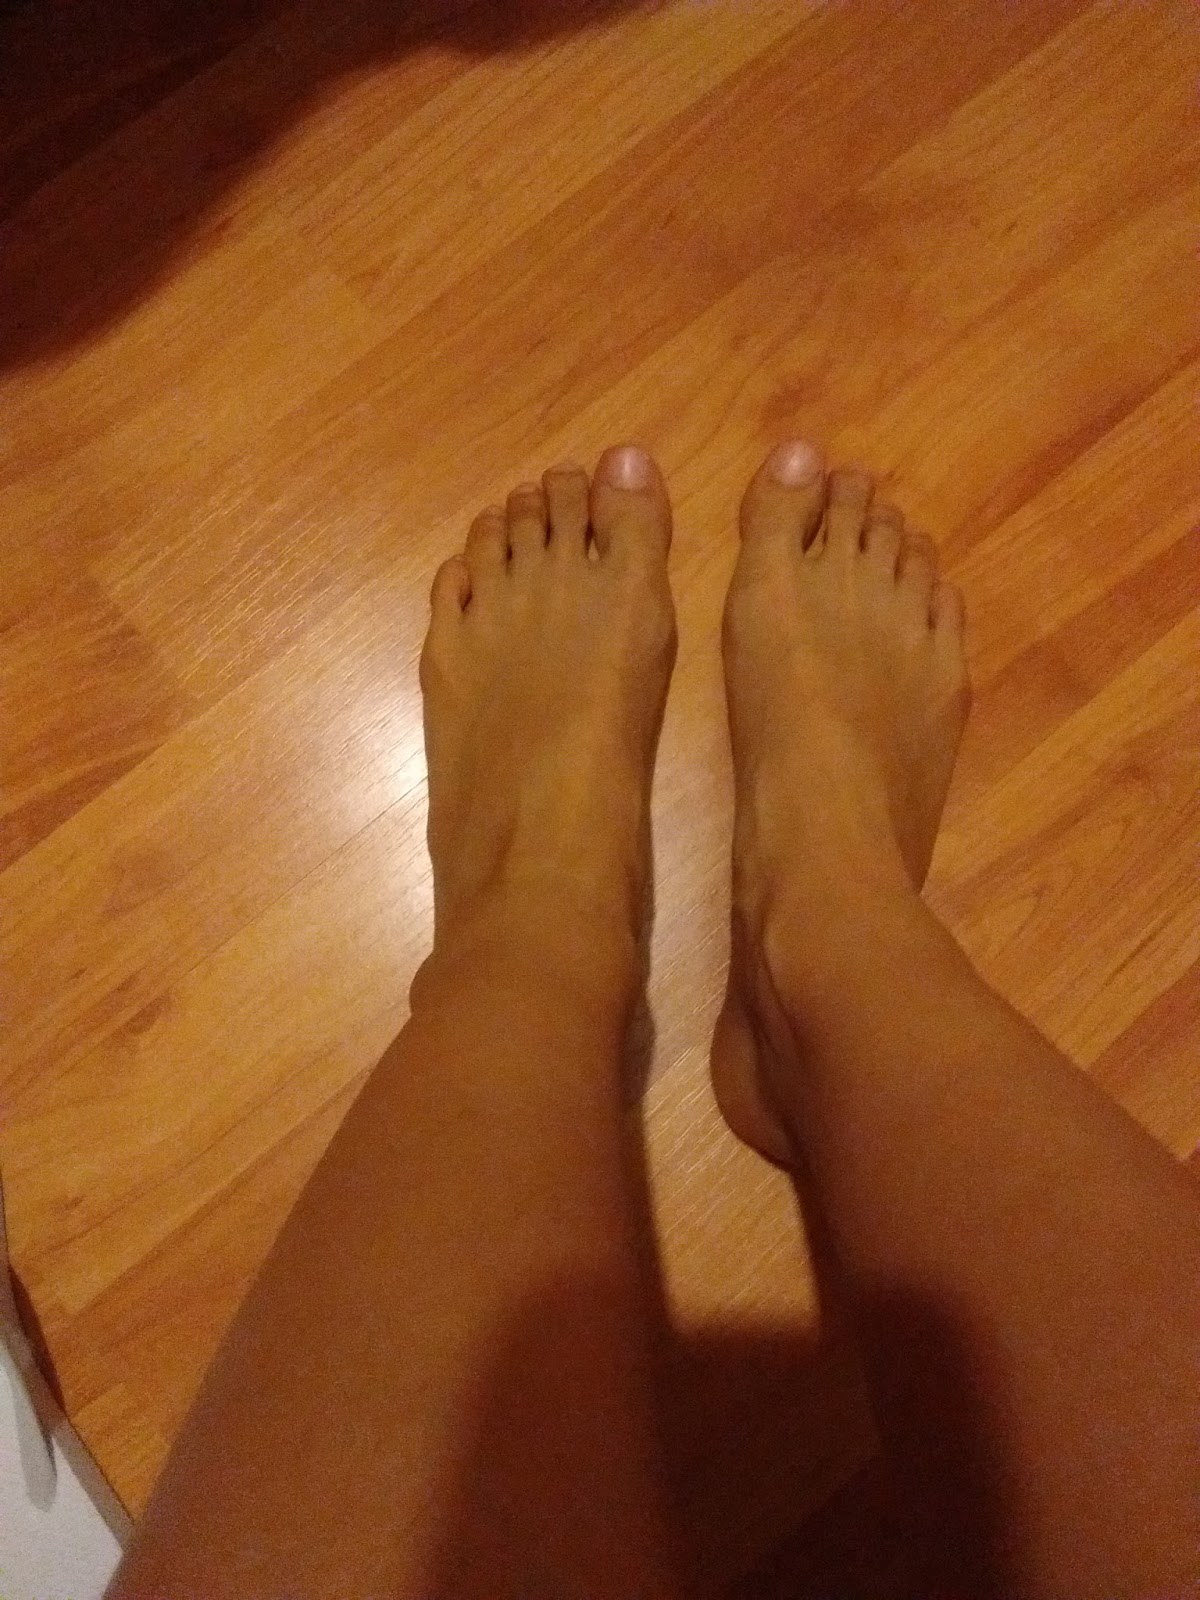 homemade sexy feet pics